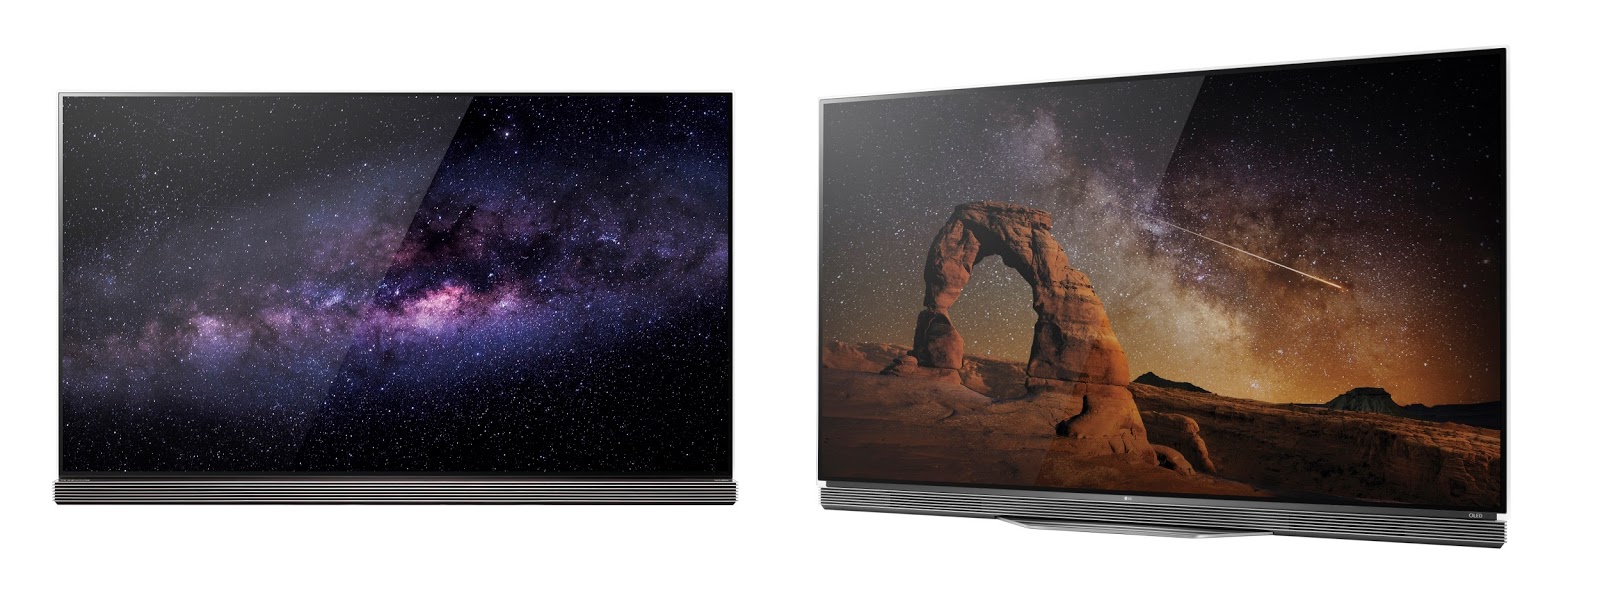 LG OLED TV E6 and G6 revealed at CES 2016